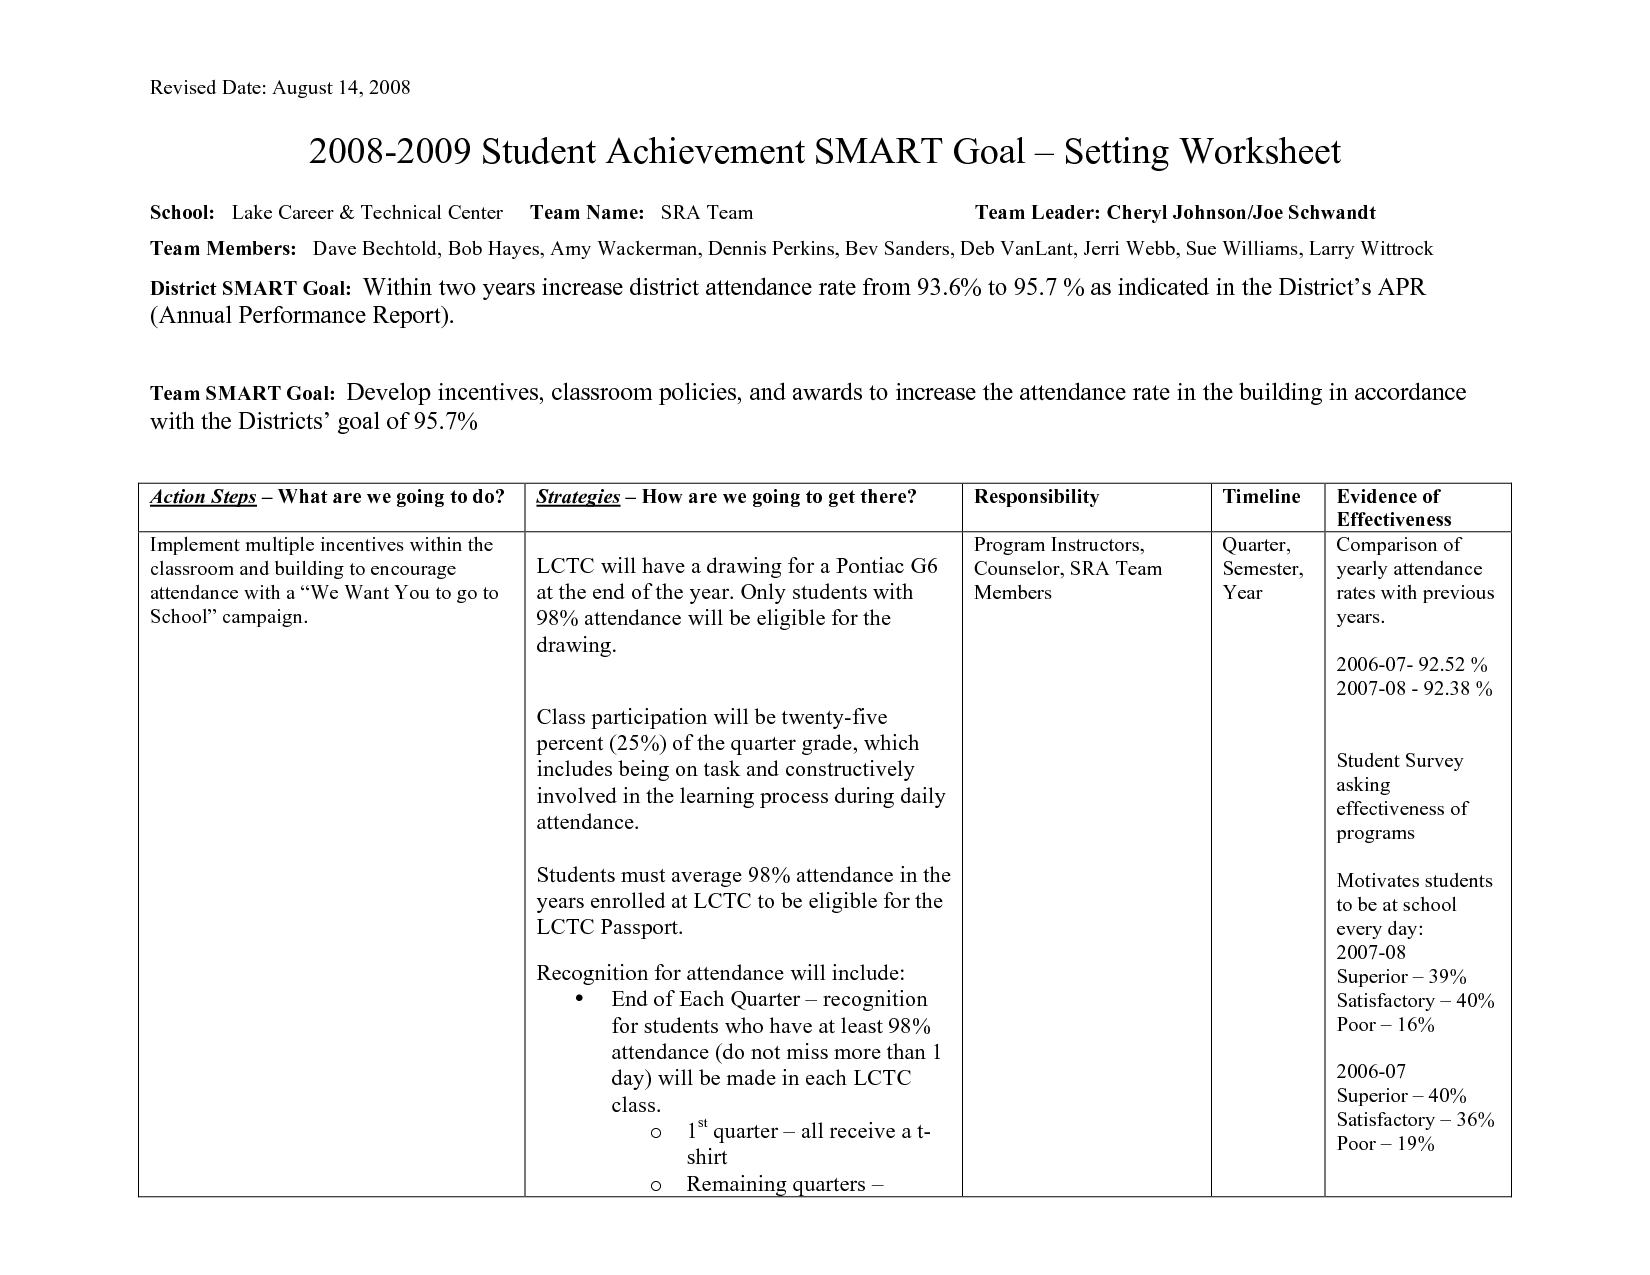 High School Student Goal Setting Worksheet Image